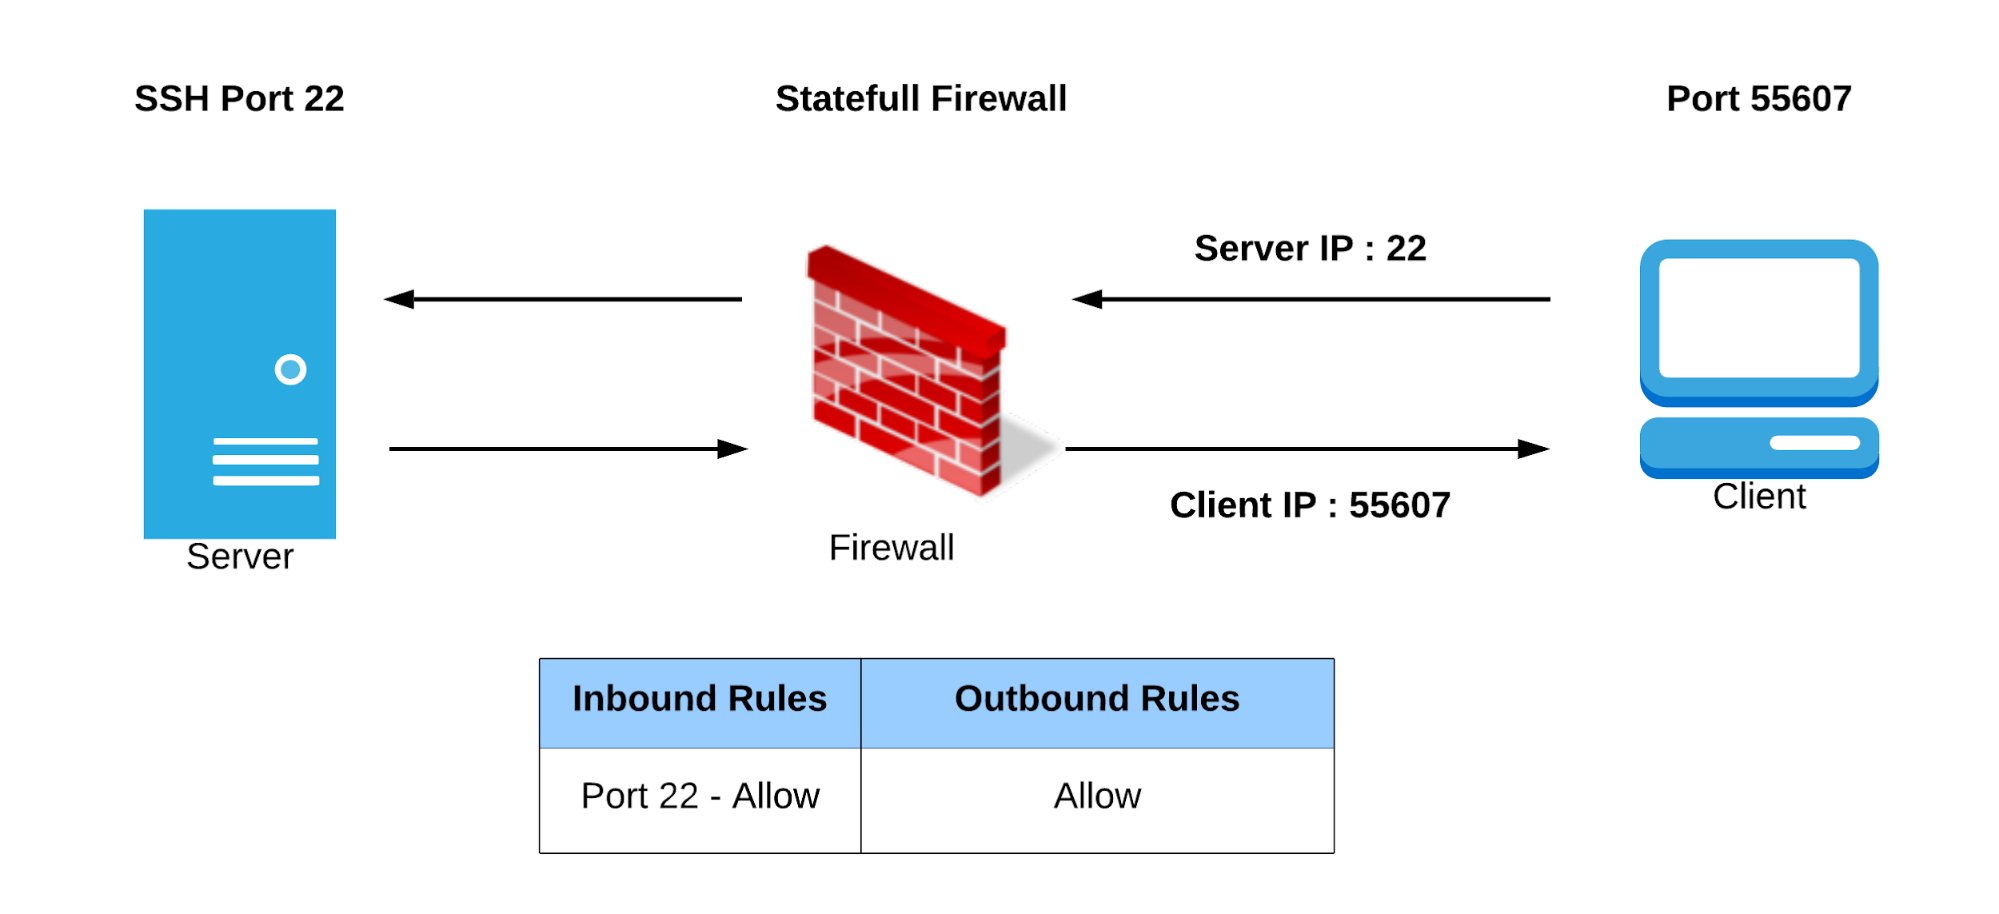 Stateful Firewall